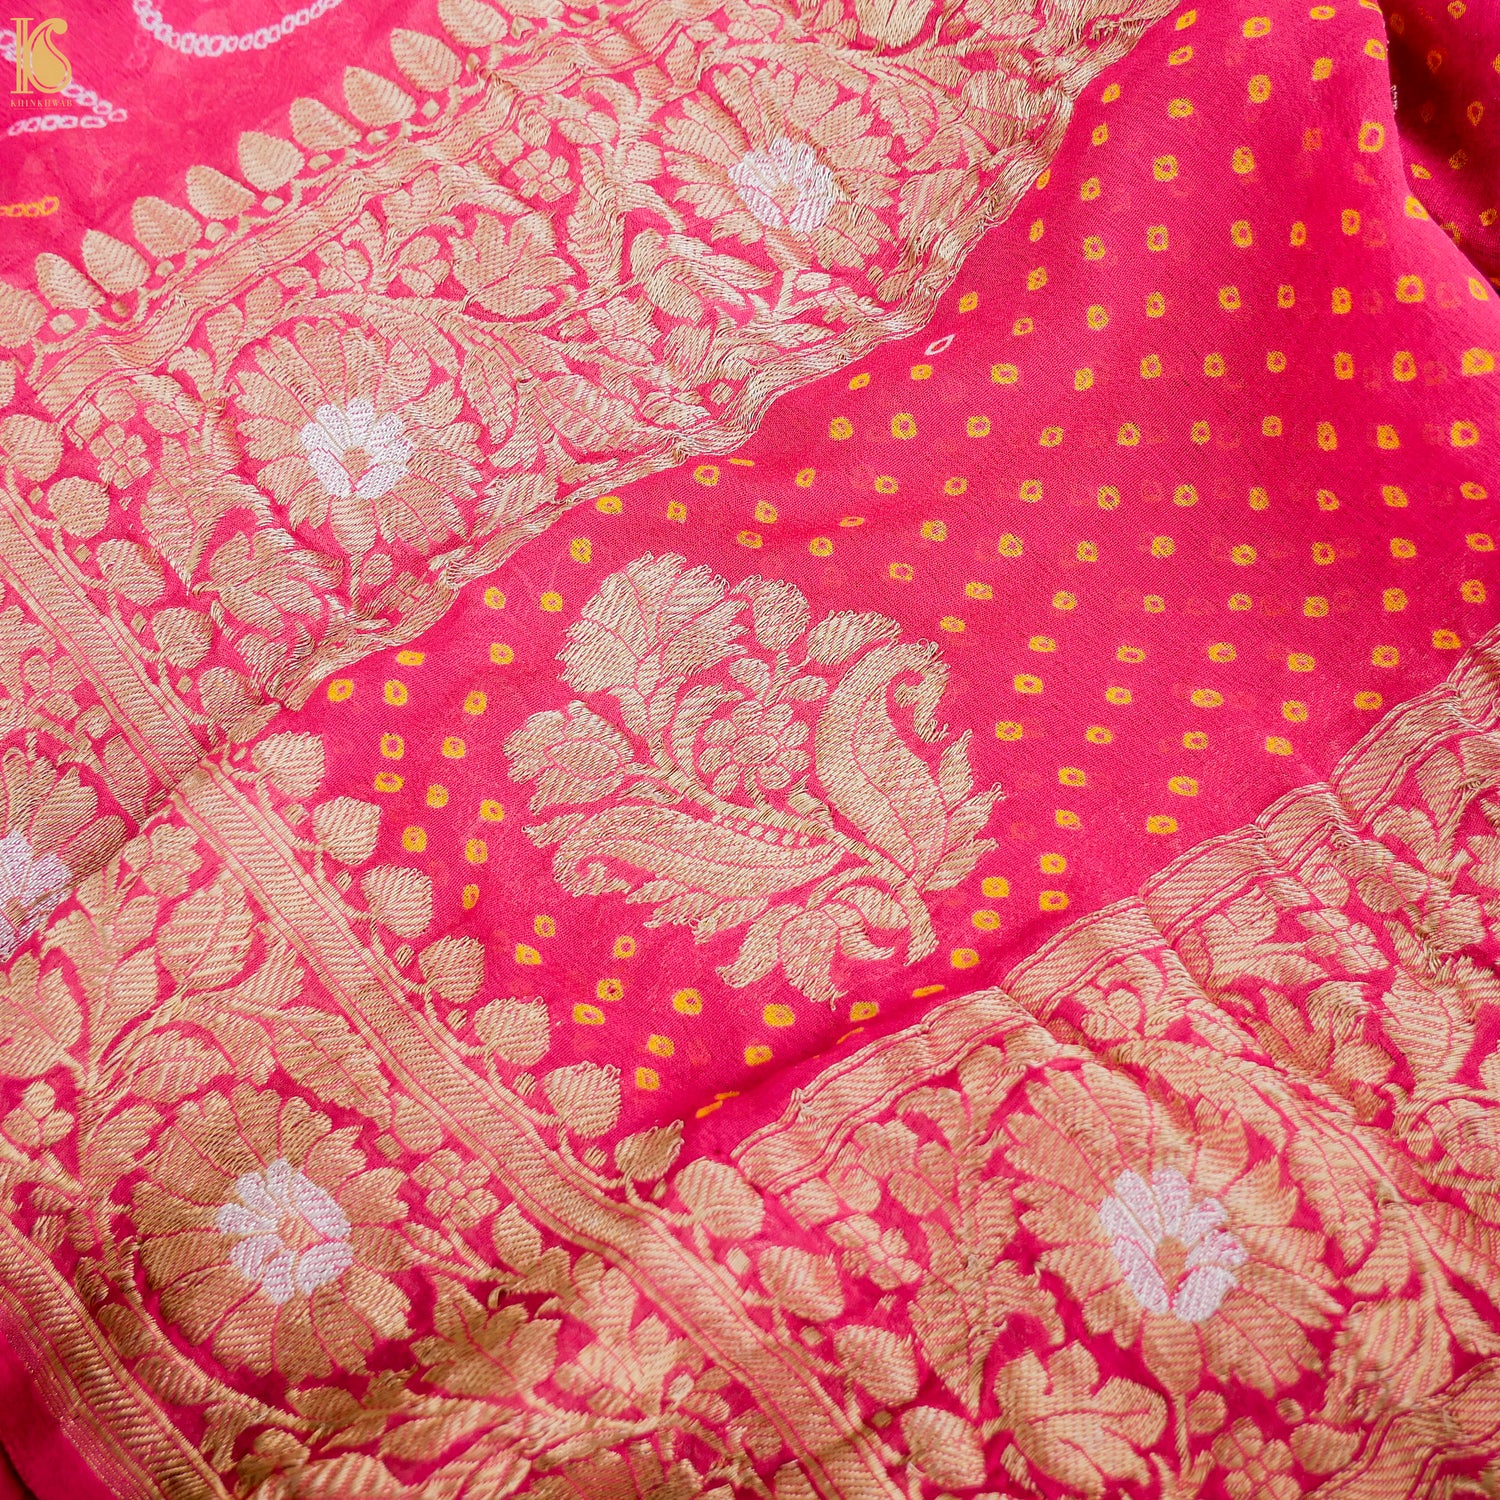 Pink Georgette Handloom Banarasi Bandhani Suit Fabric - Khinkhwab